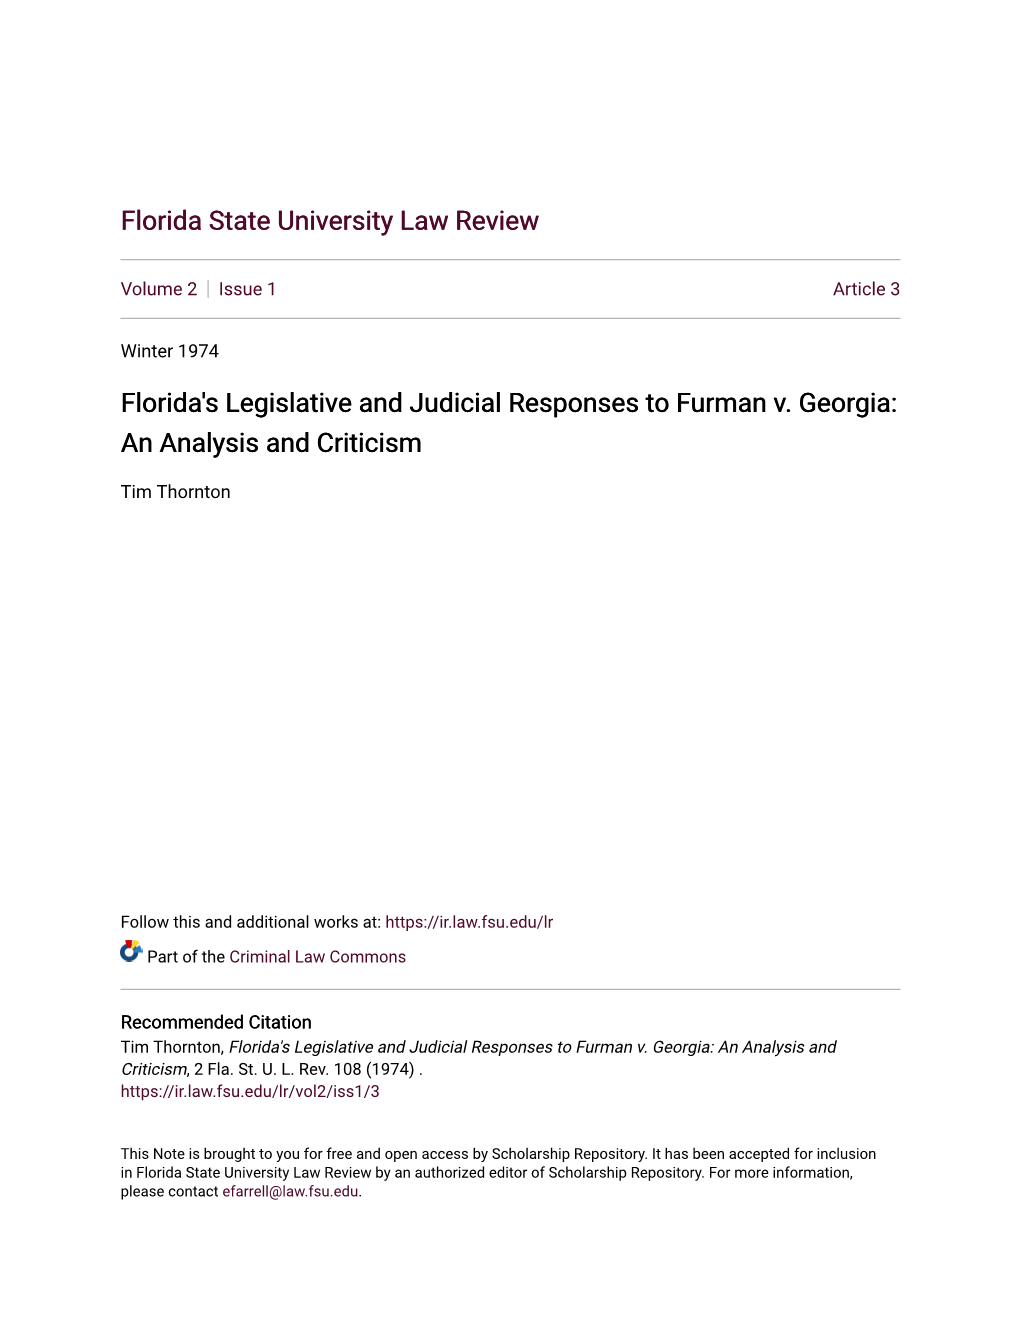 Florida's Legislative and Judicial Responses to Furman V. Georgia: an Analysis and Criticism